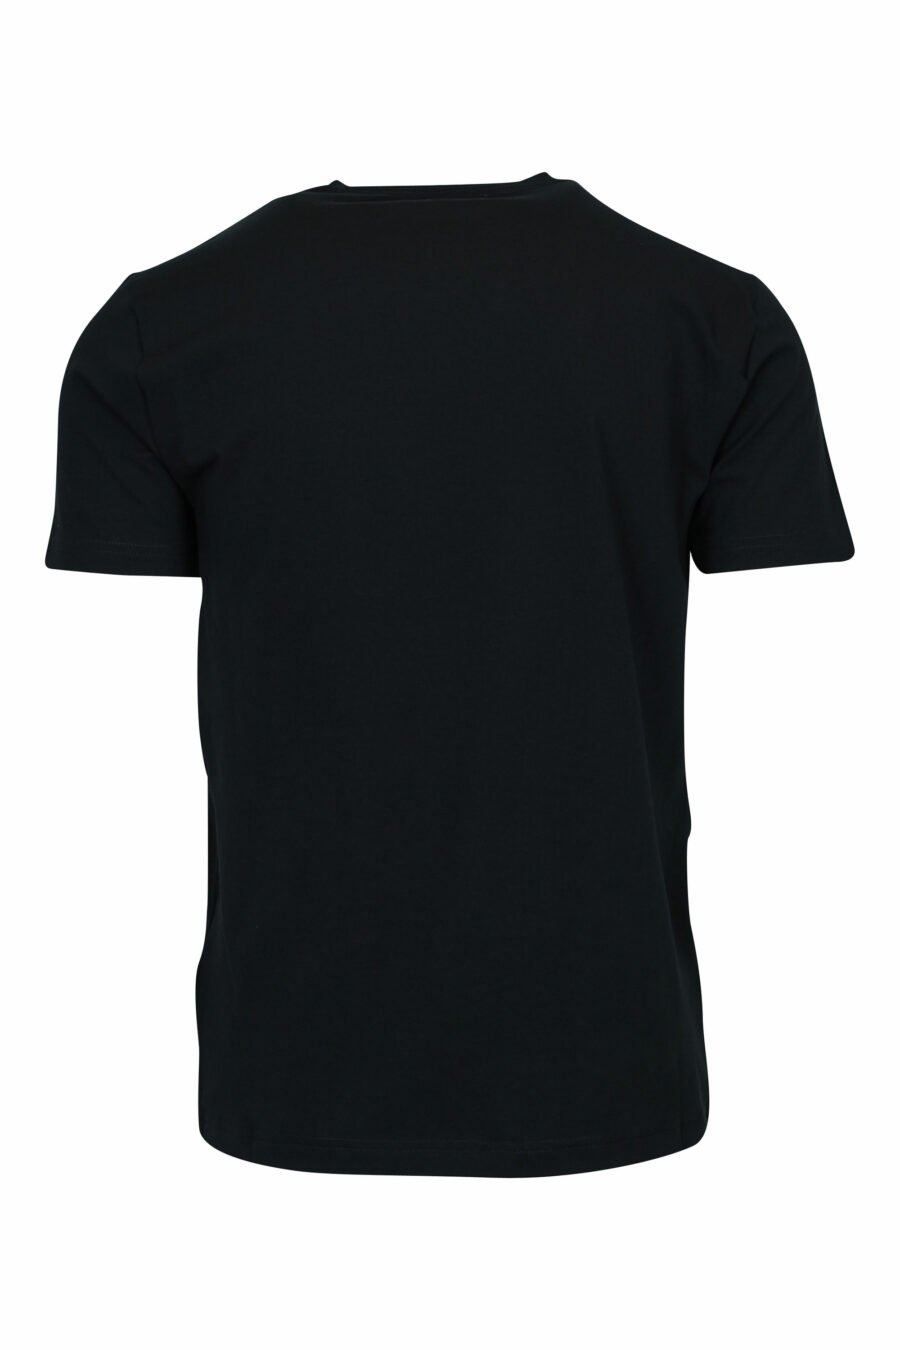 Schwarzes T-Shirt mit neongoldenem "lux identity" Maxilogo - 8057970672234 1